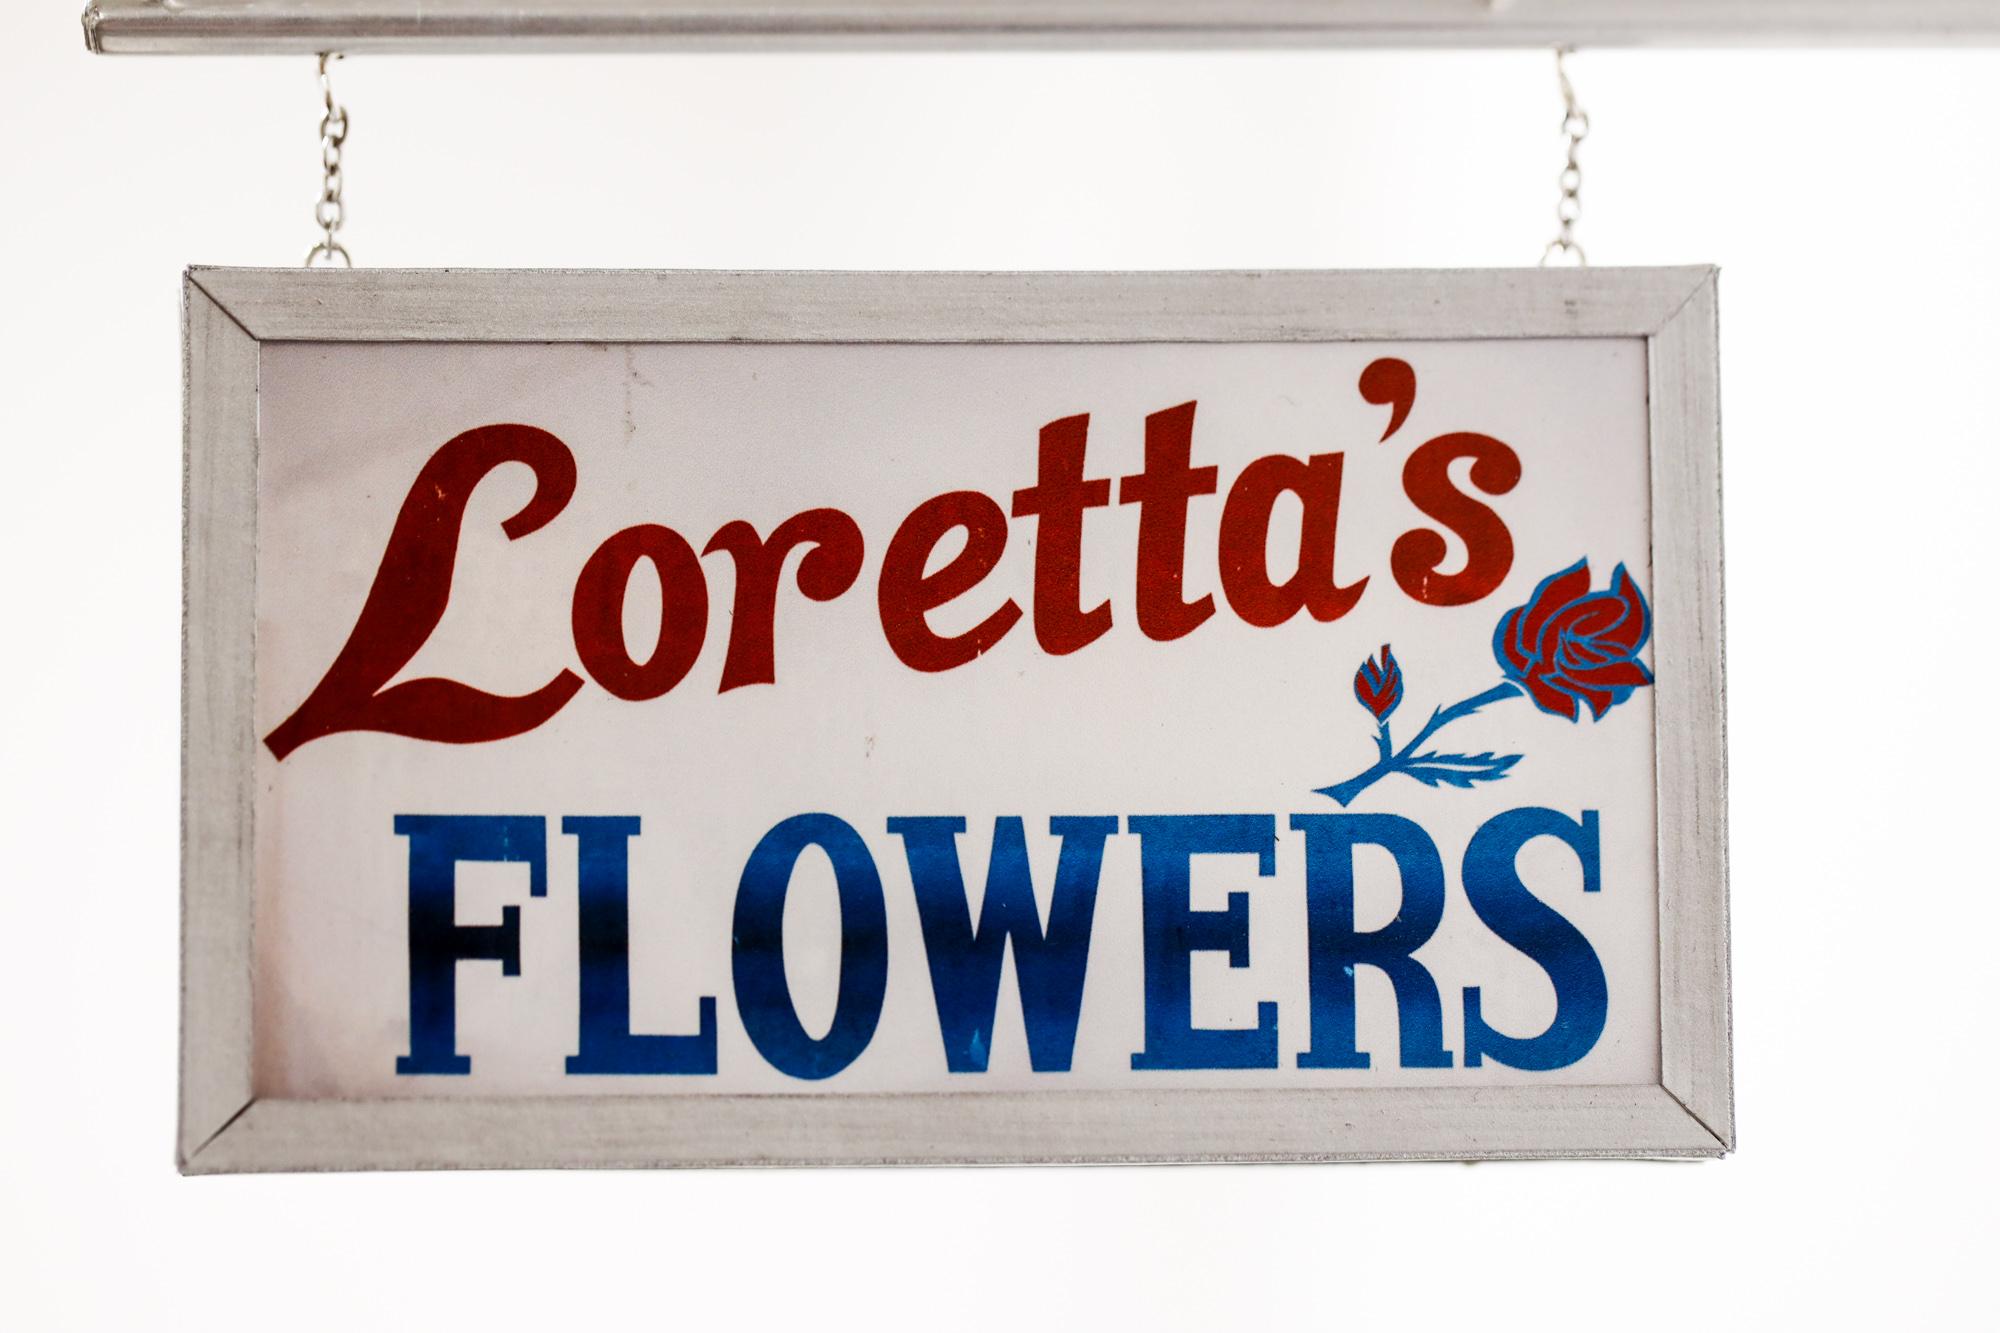 Loretta's Flowers For Sale 1